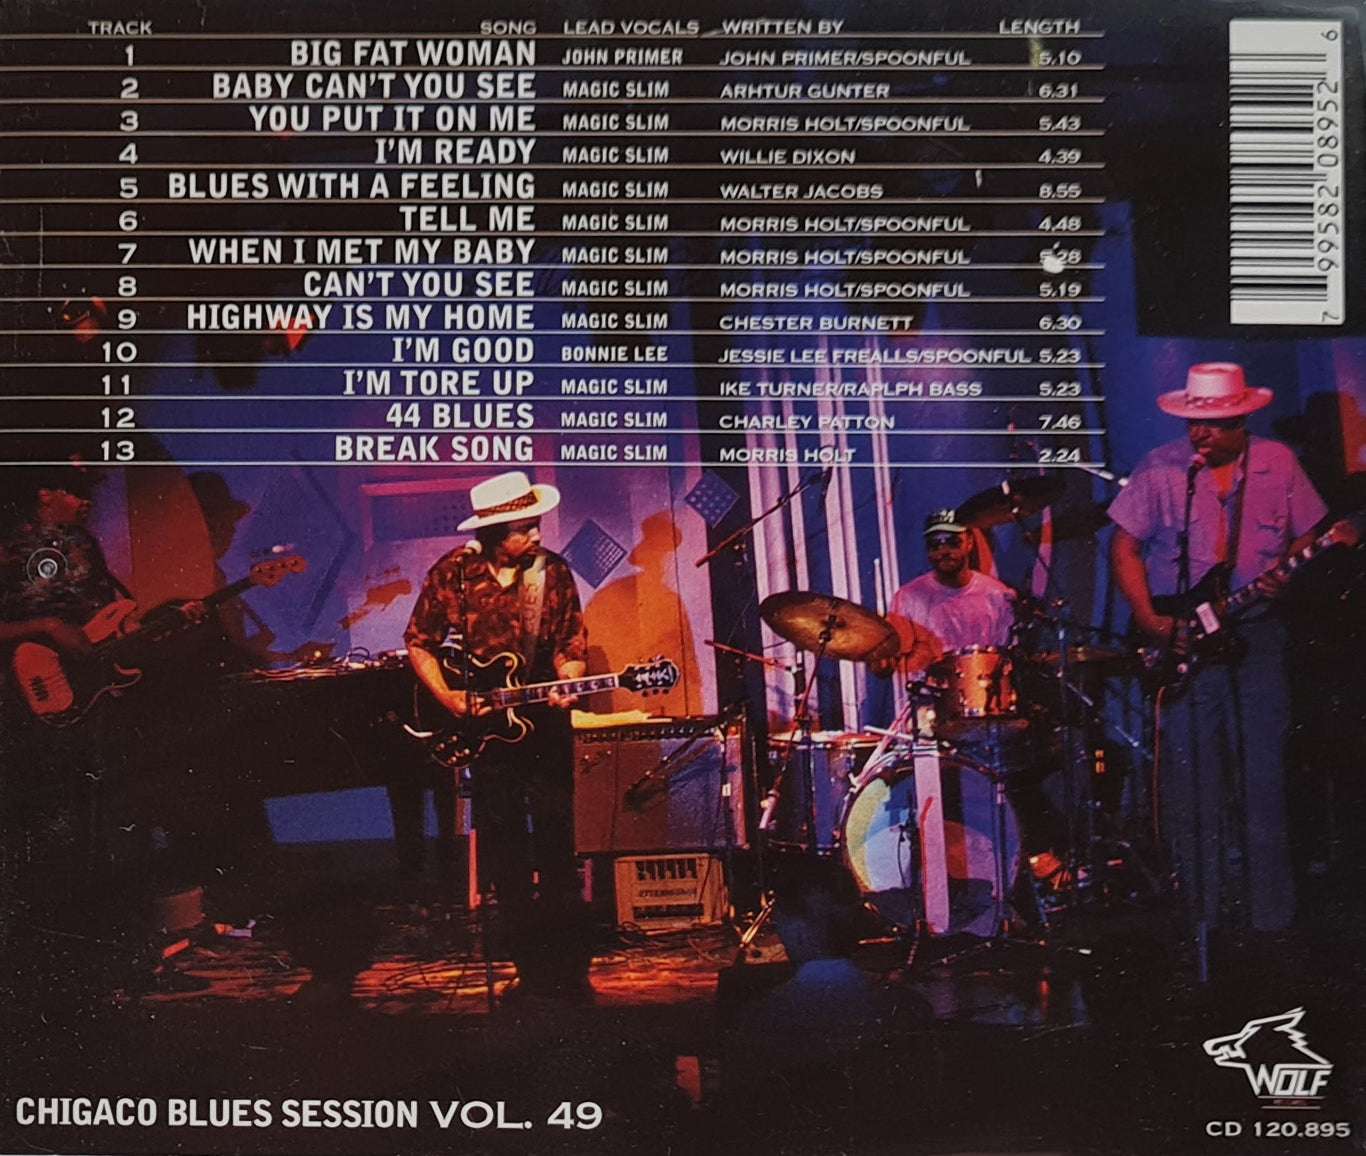 Magic Slim and the Teardrops - 44 Blues (CD)